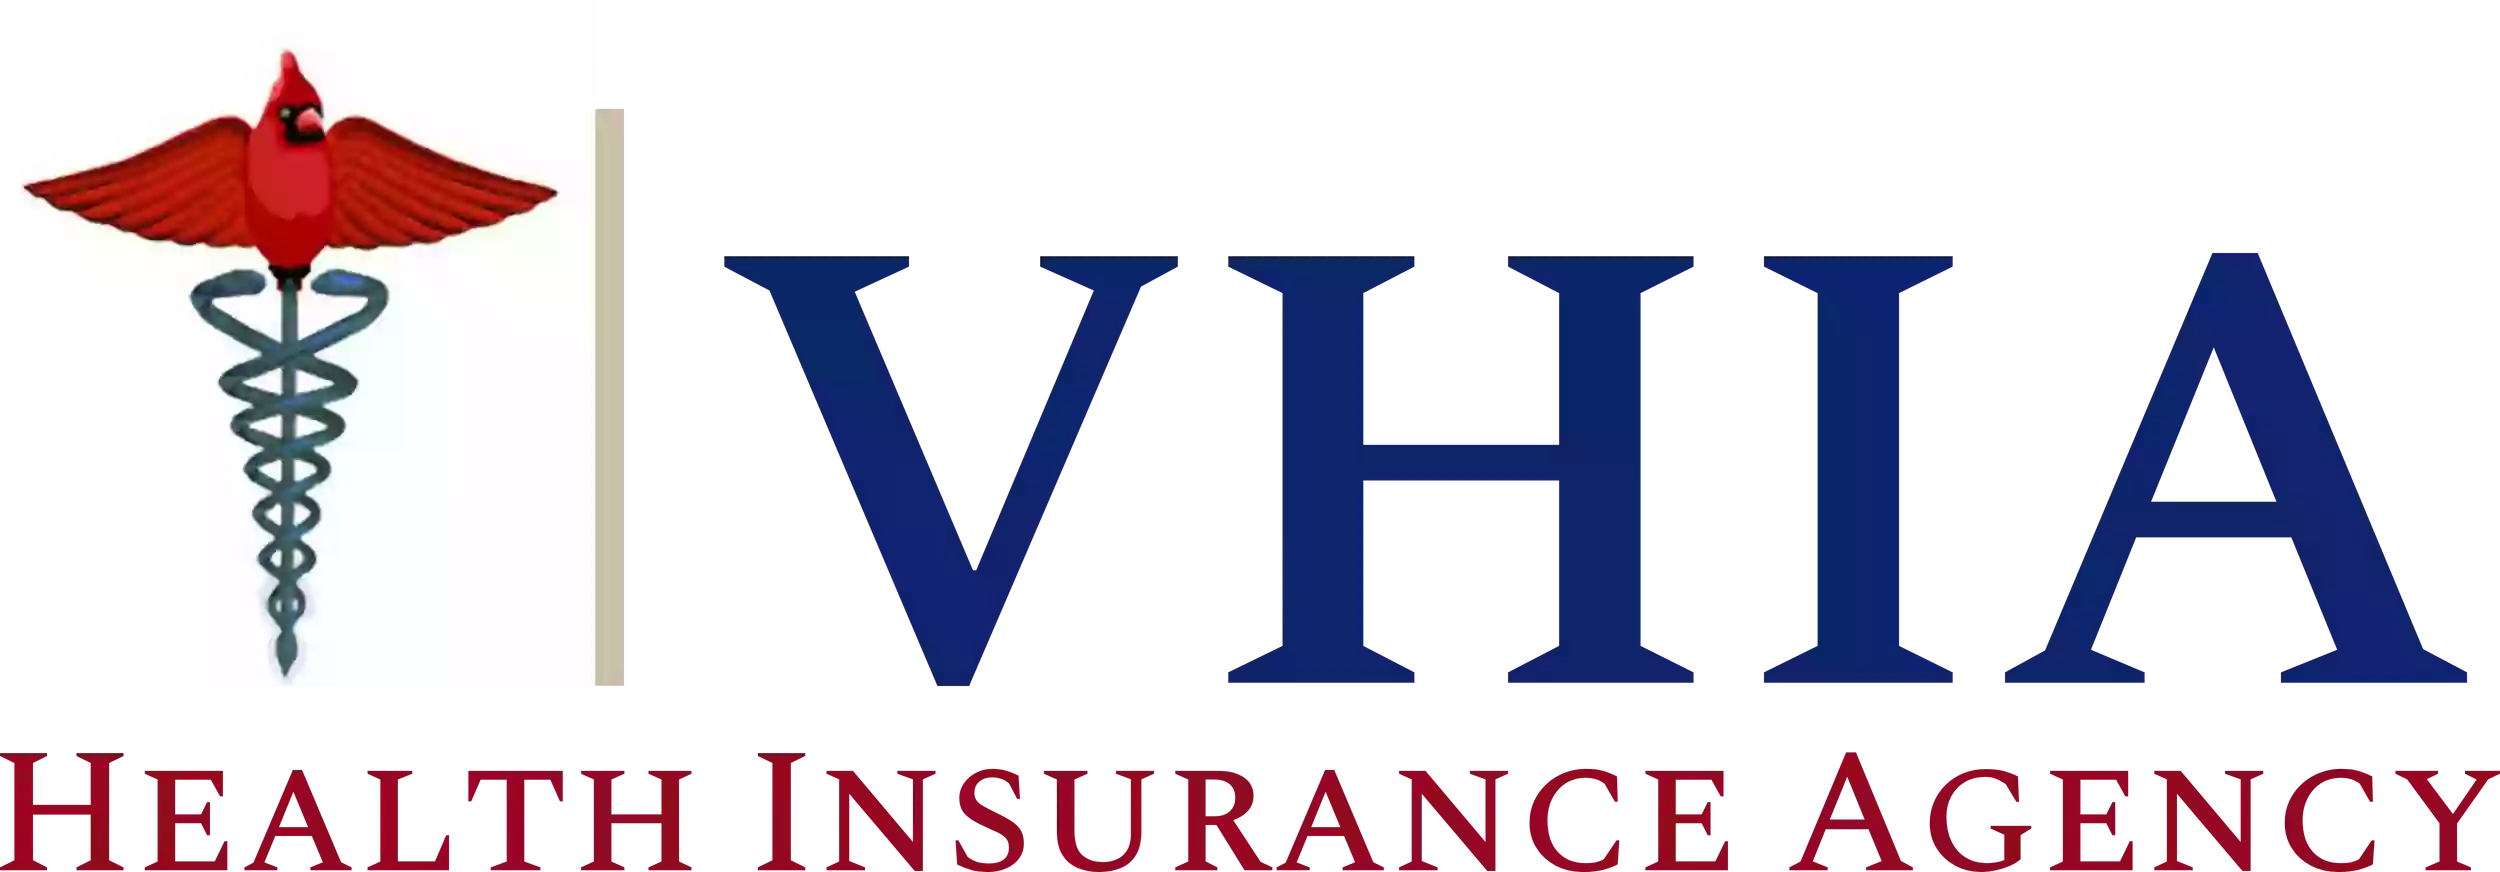 Virginia's Health Insurance Agent, Inc.